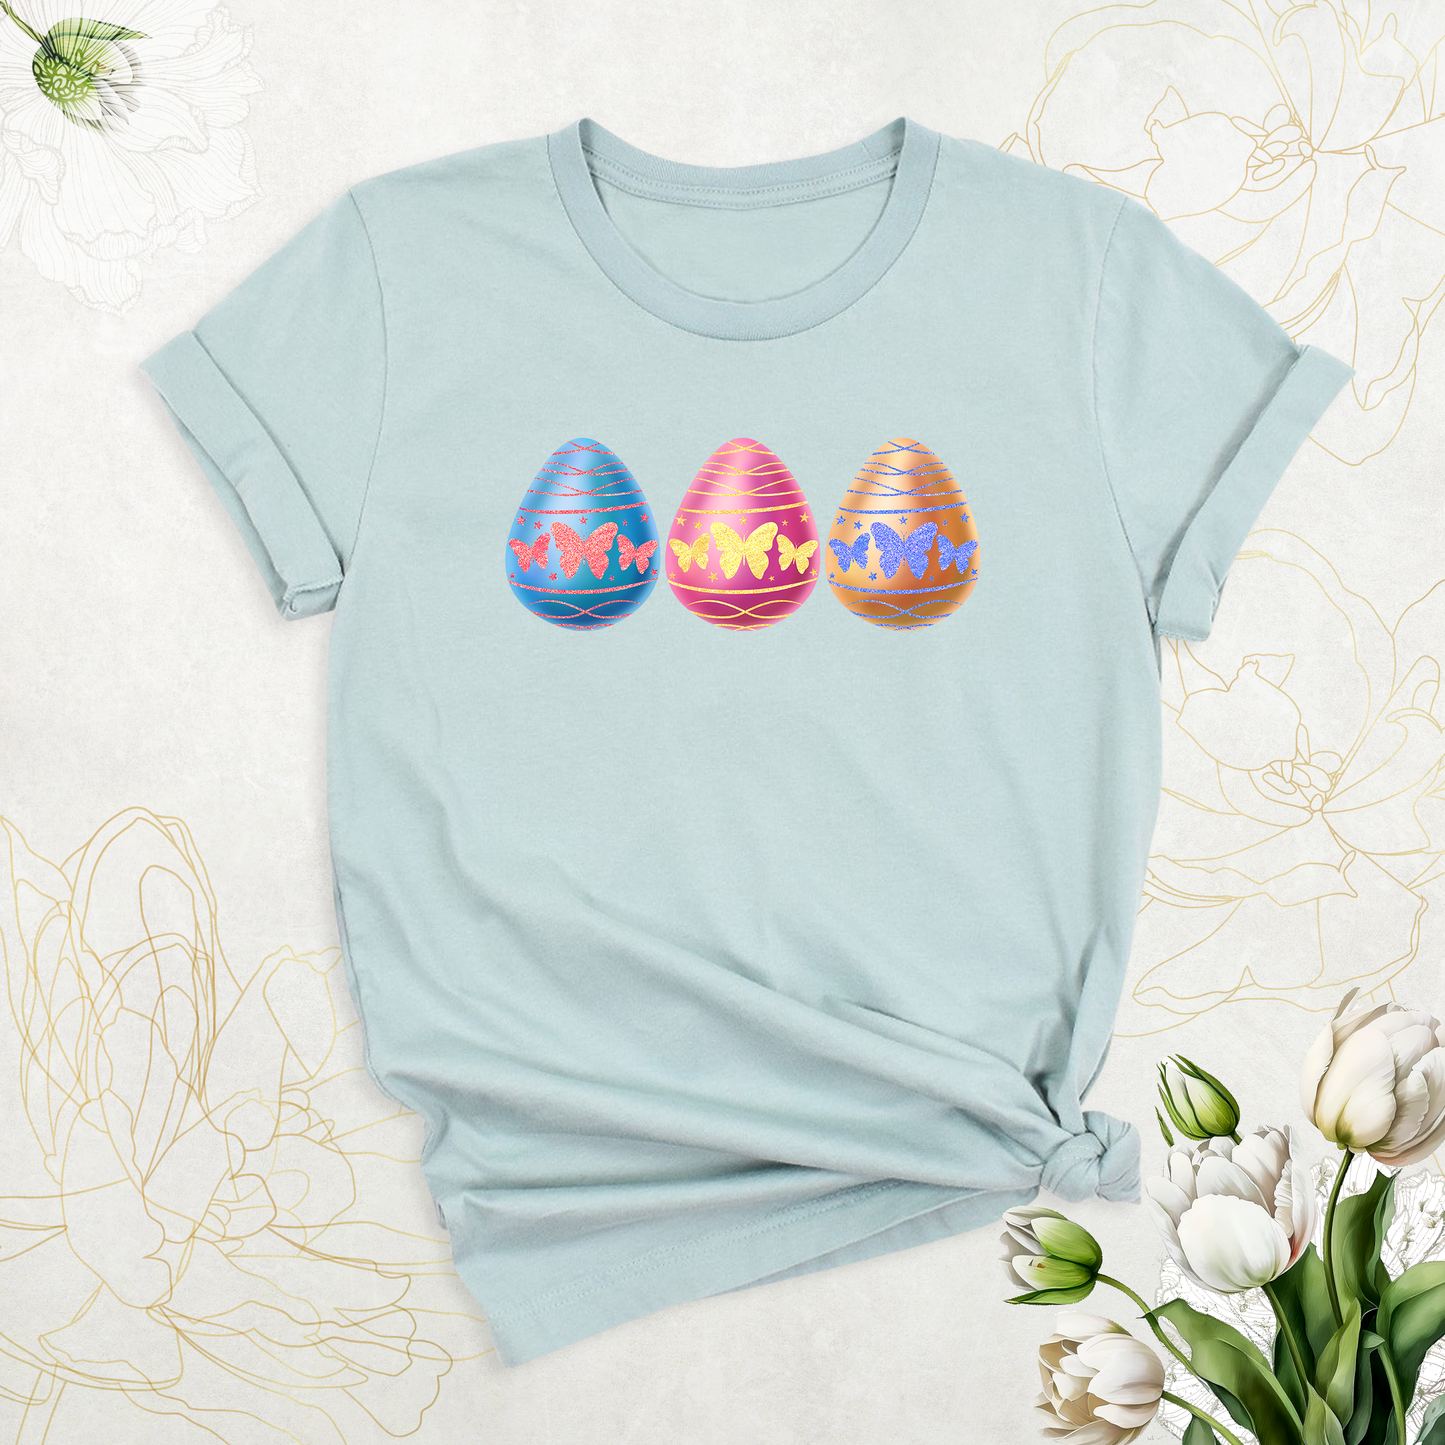 egg shirts